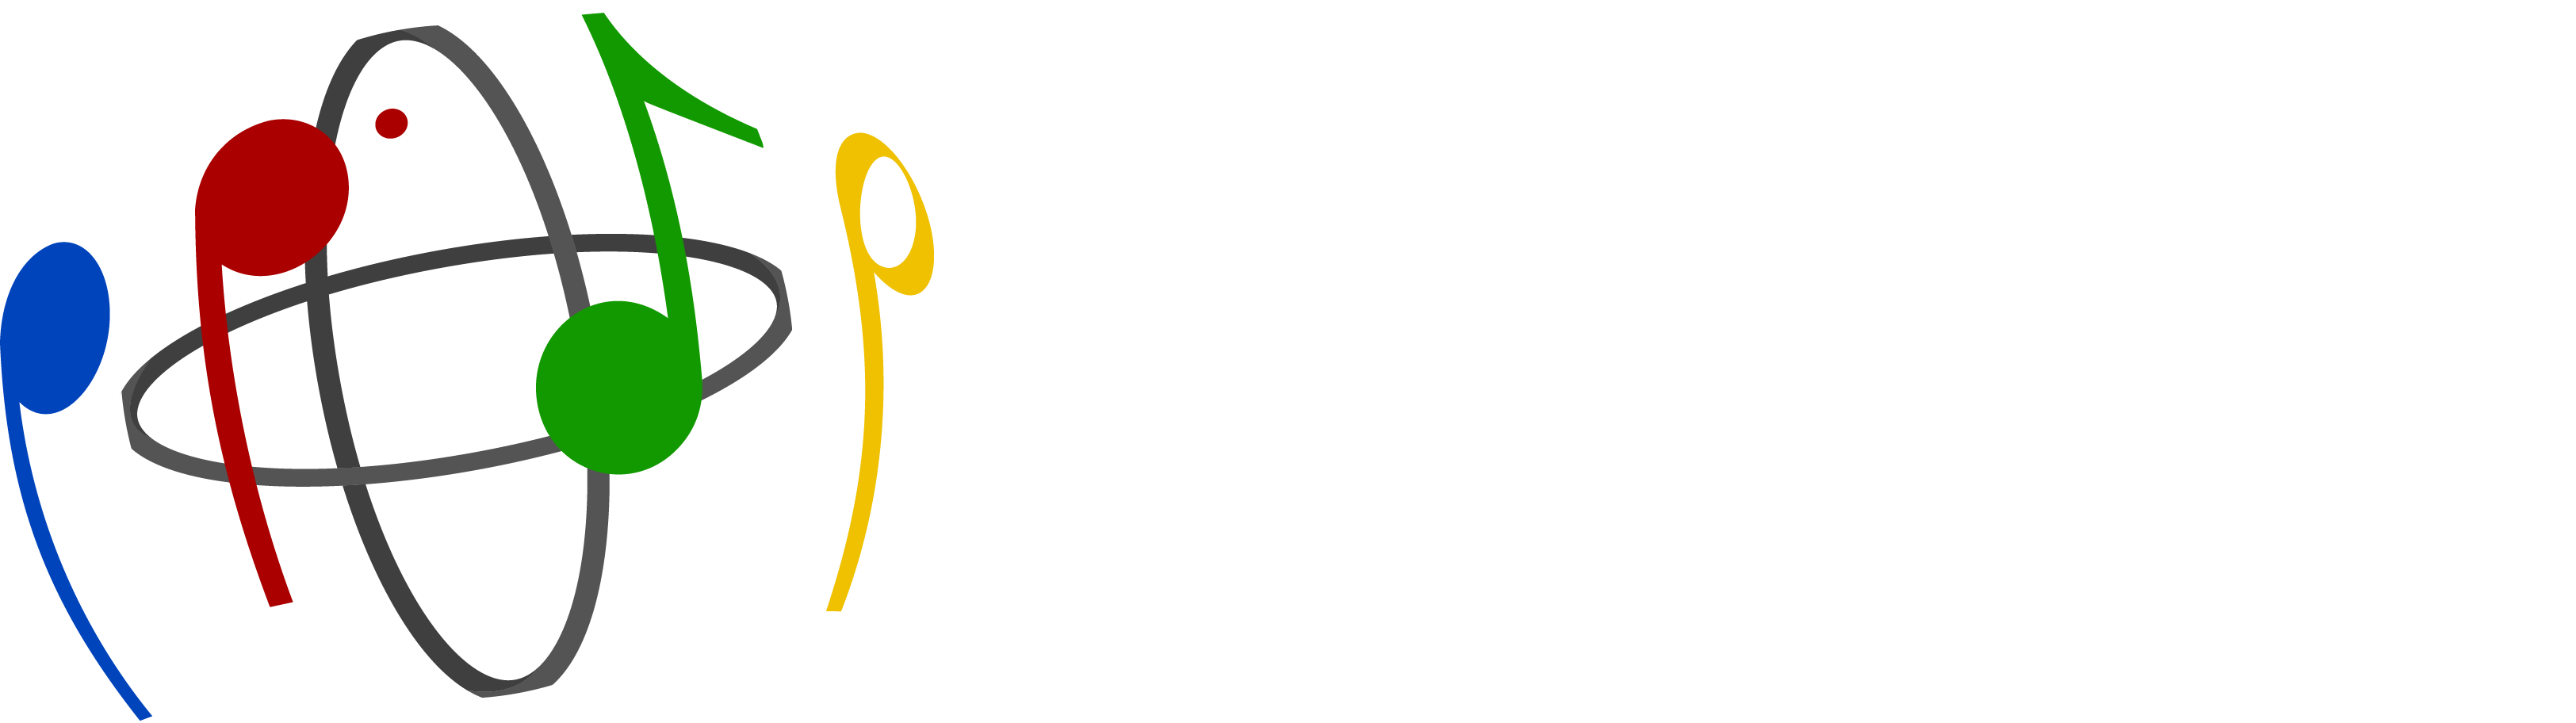 Calgary Multicultural Choir